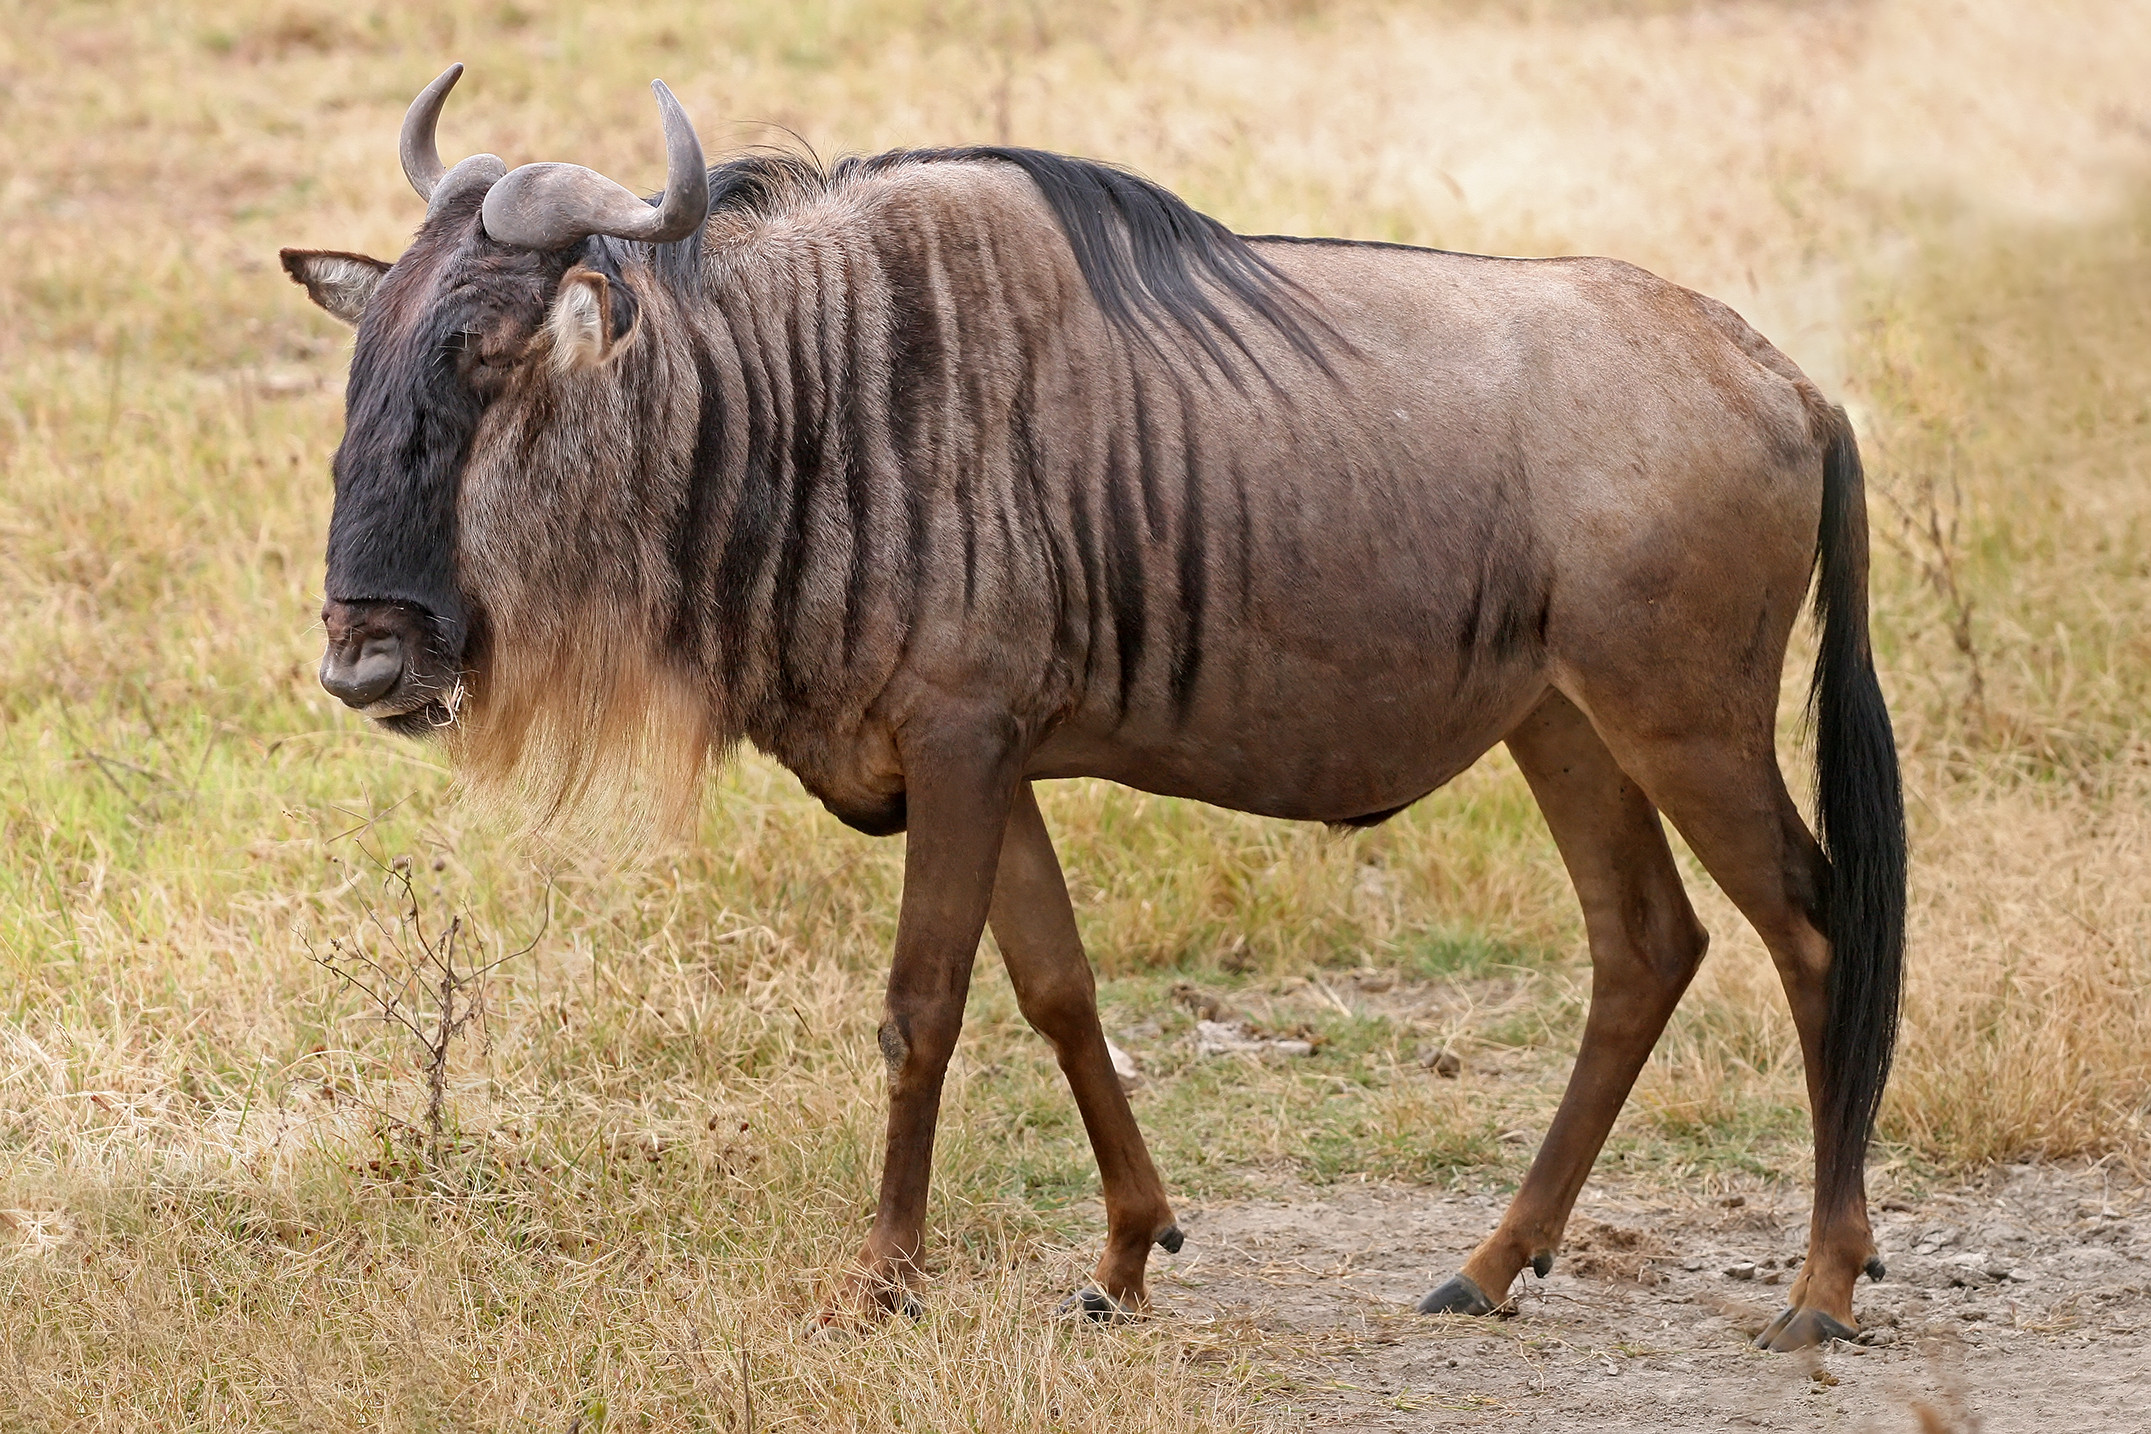 Wildebeest - Wikipedia